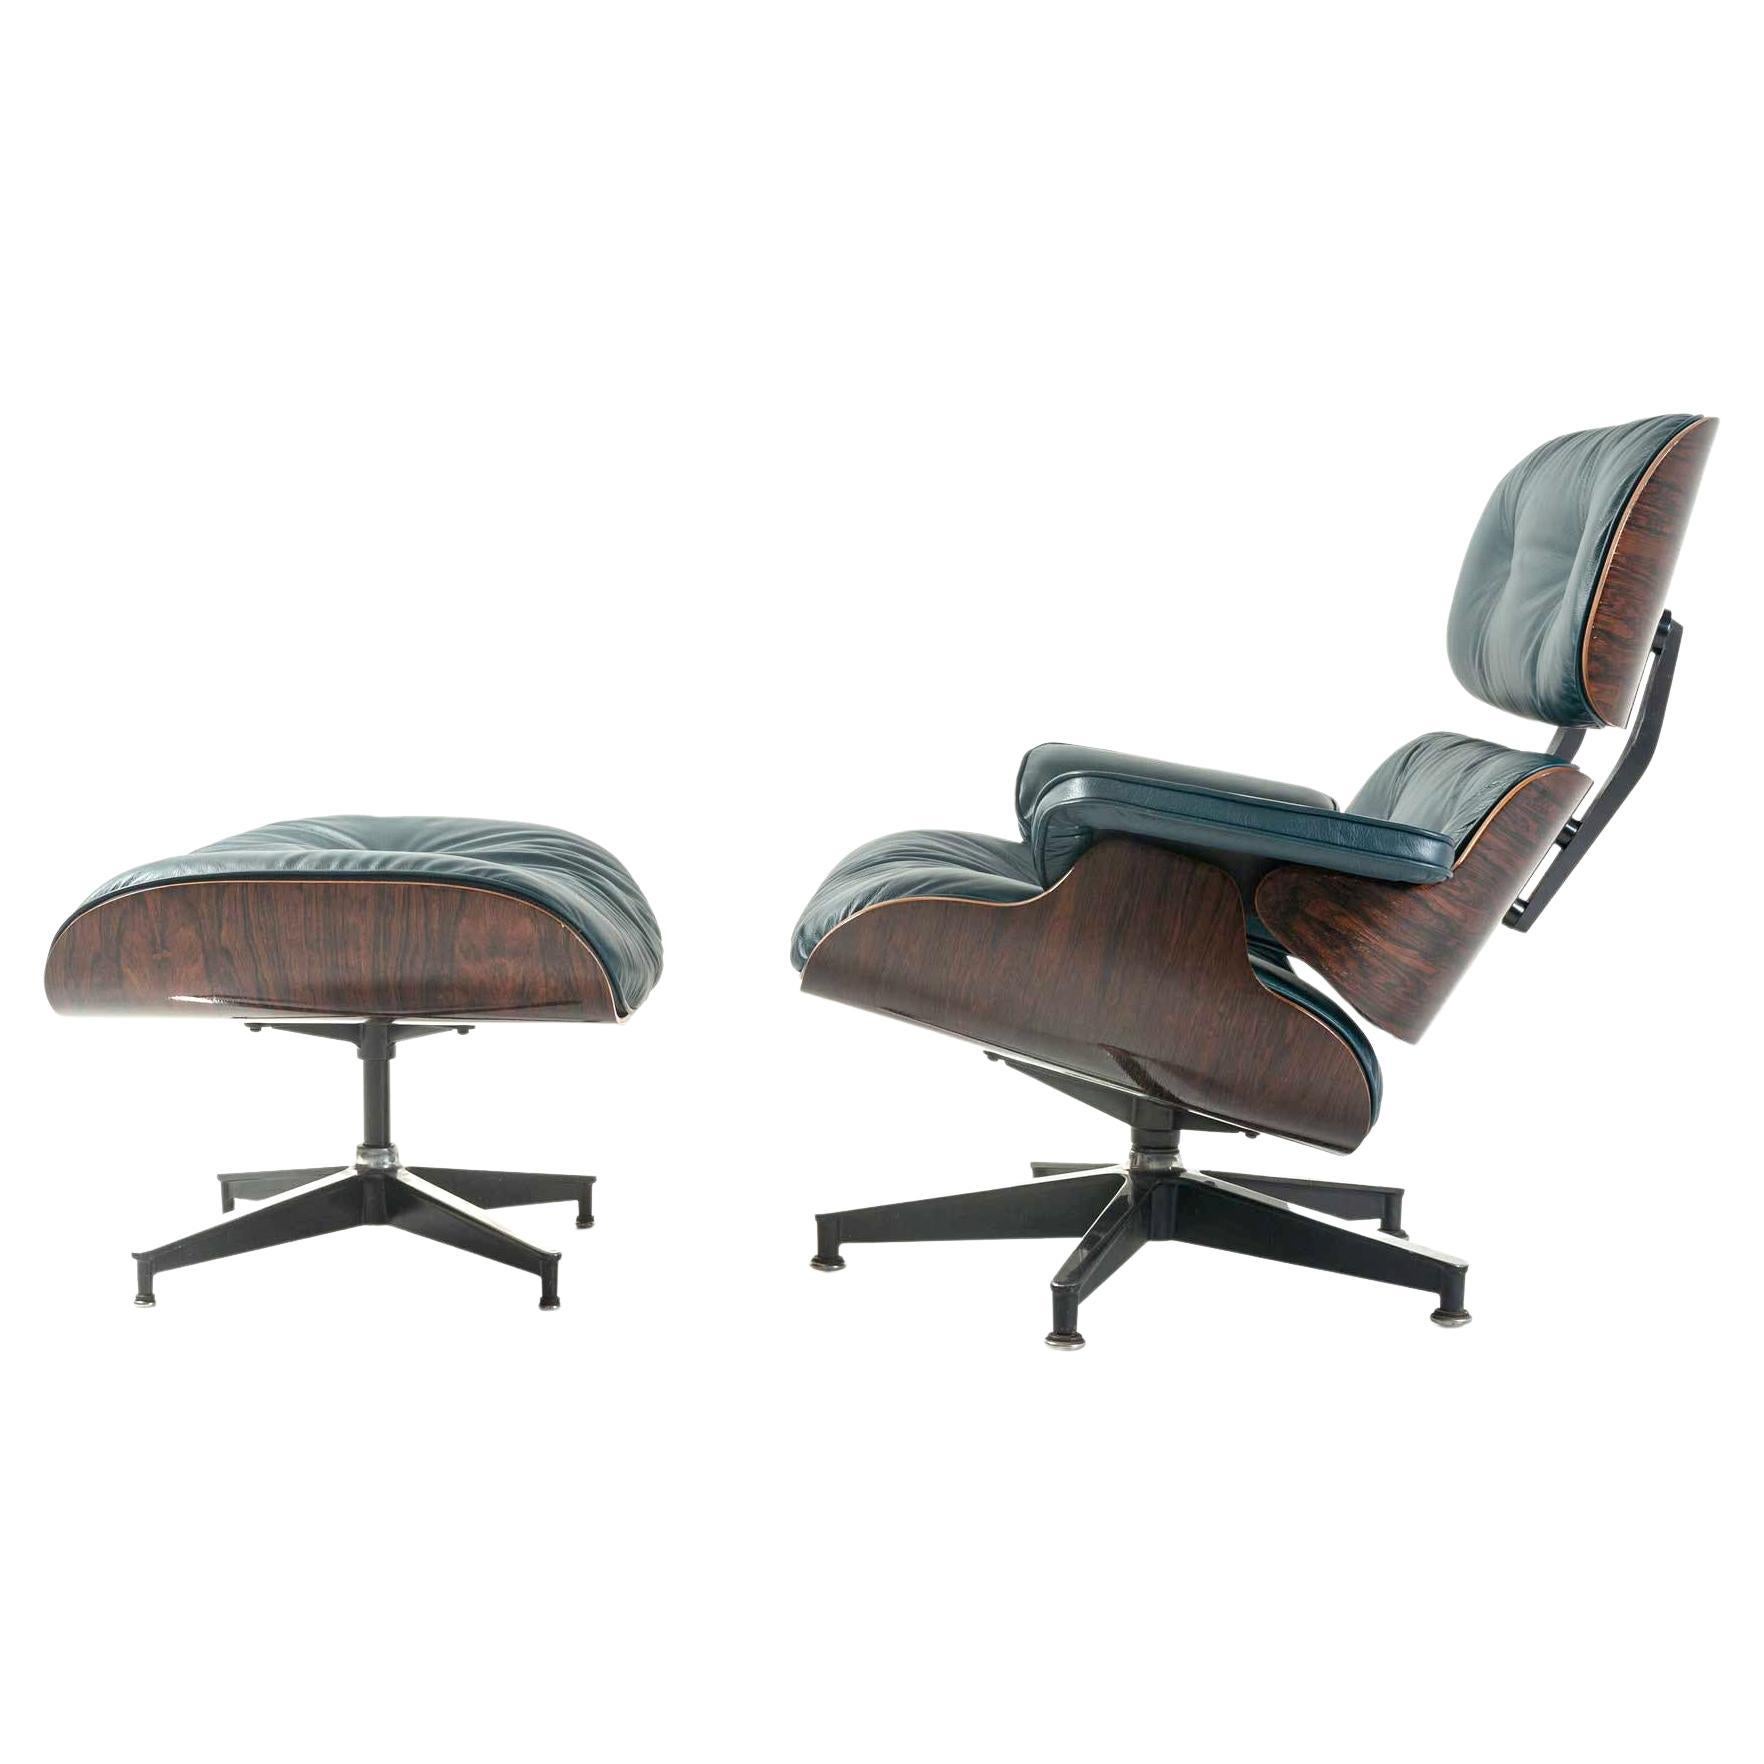 3rd Gen Eames Lounge Chair 670-671 in Dark Pine Green Aniline Leather